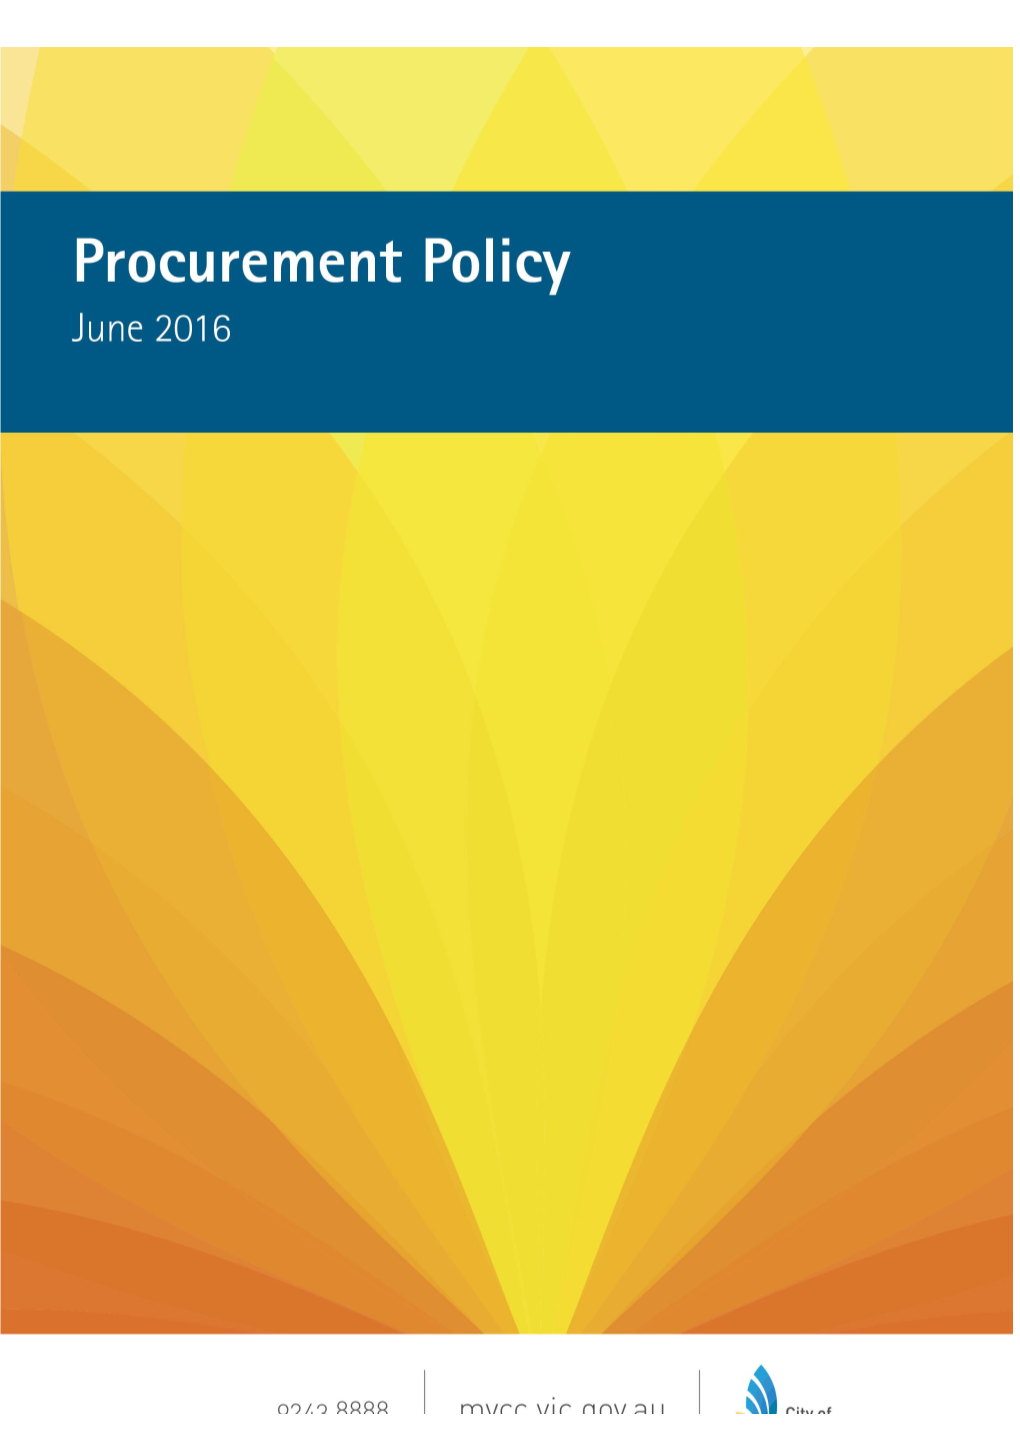 Procurement Policy Statement